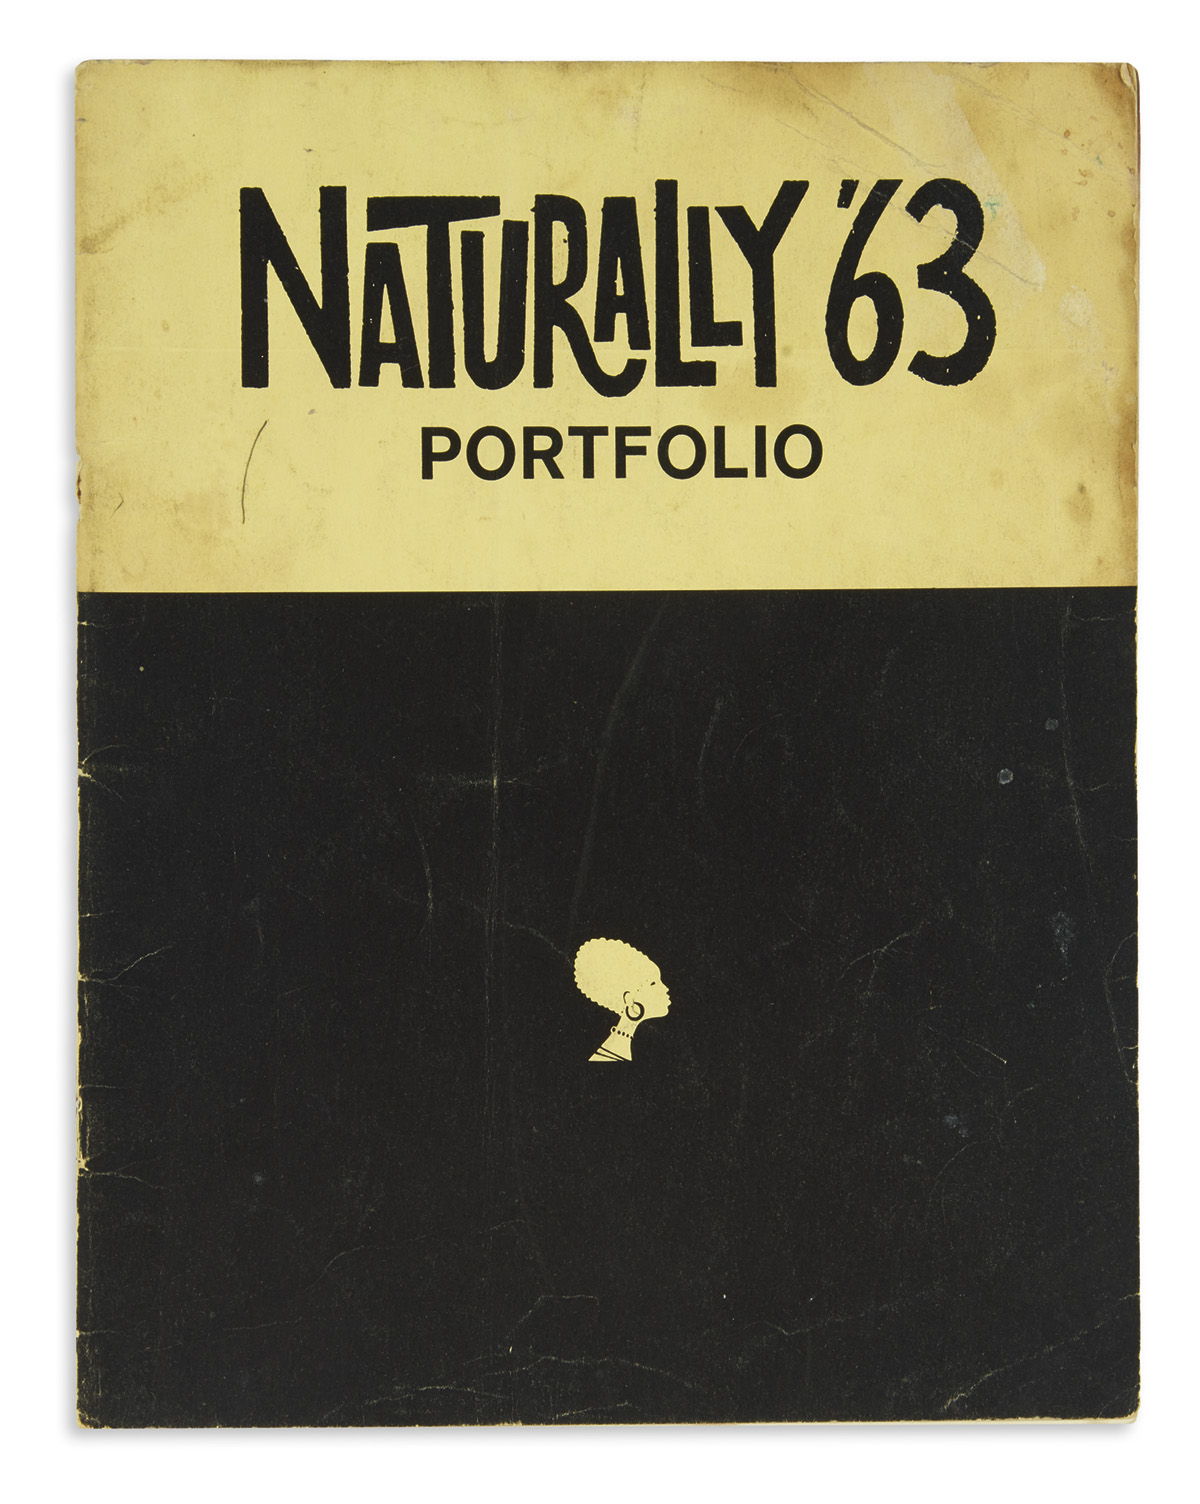 (BEAUTY.) Naturally 63 Portfolio (a program issued by the Grandassa Models).